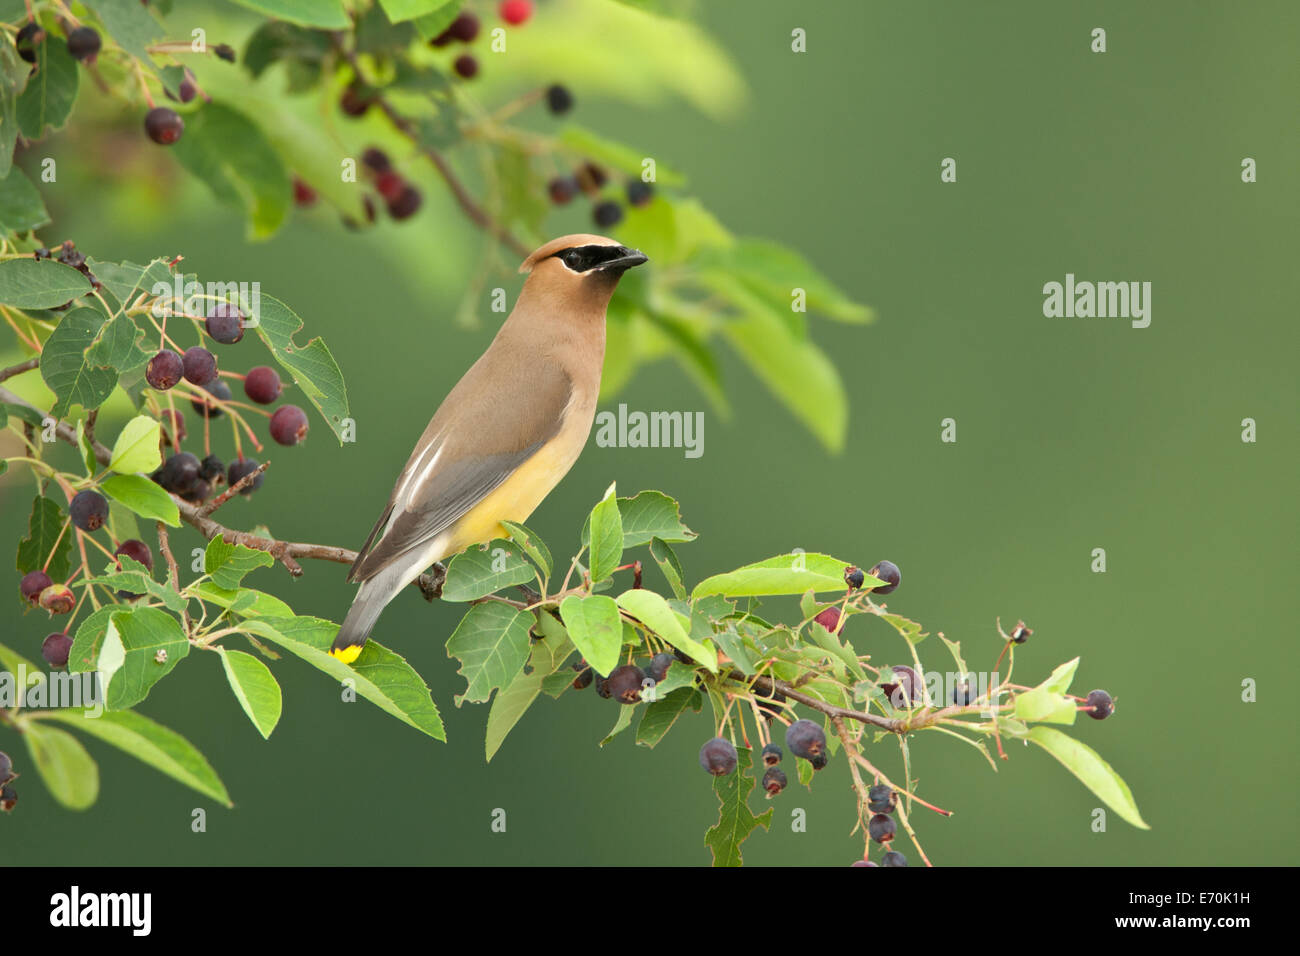 Cedar Waxwing bird songbird in Serviceberry Tree Ornithology Science Nature Wildlife Environment Stock Photo